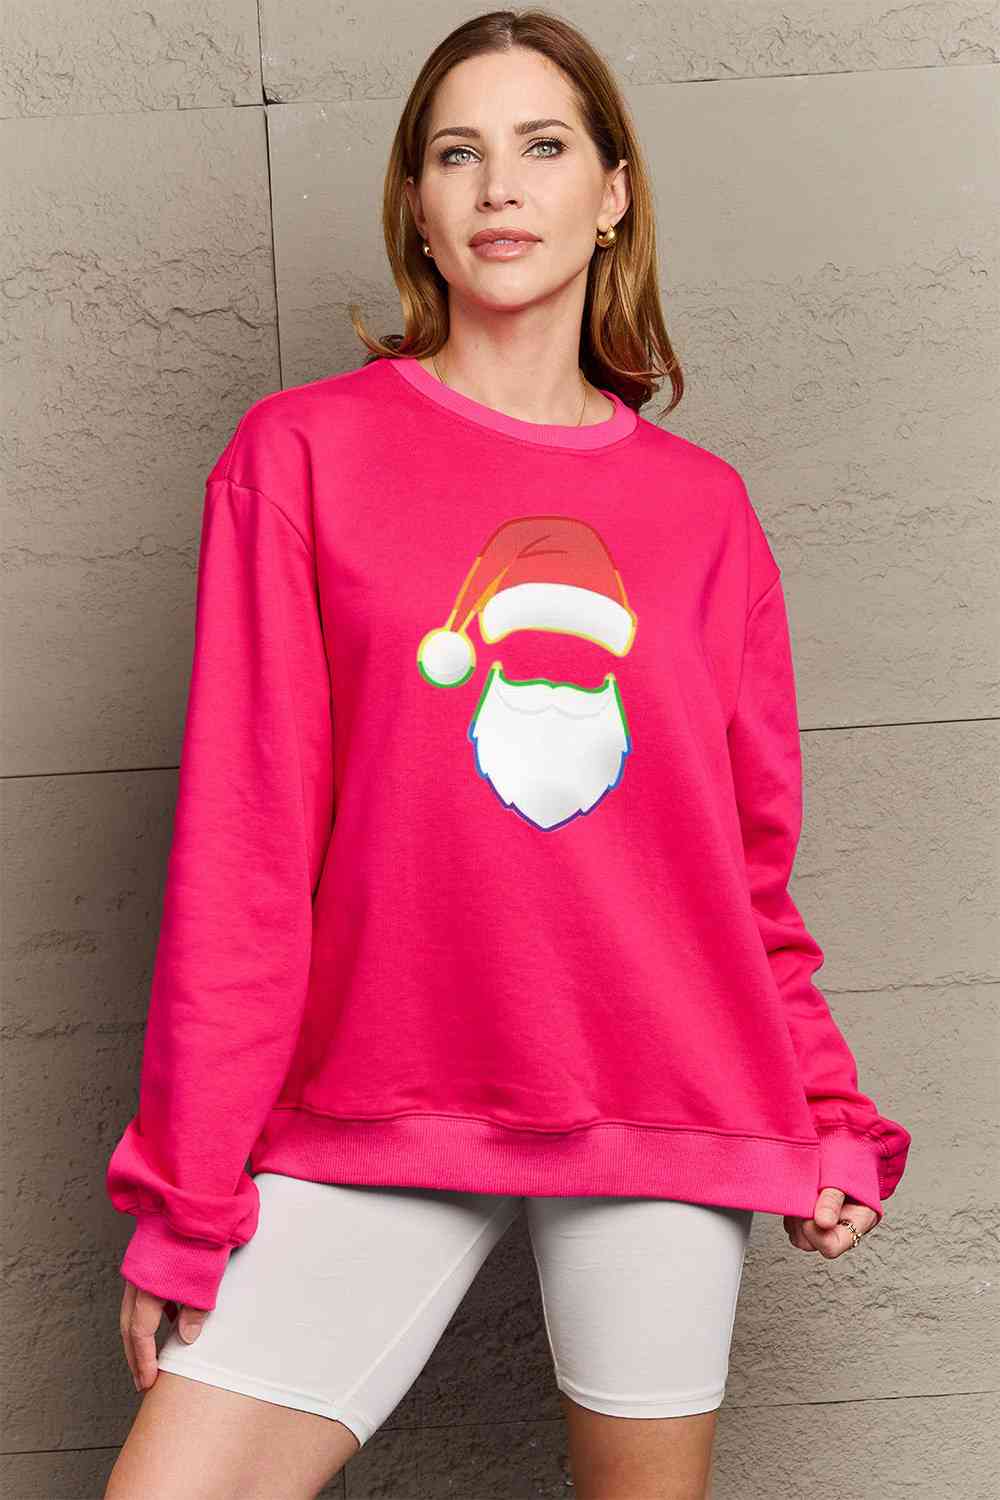 Simply Love Full Size Rainbow Santa Graphic Round Neck Sweatshirt BLUE ZONE PLANET